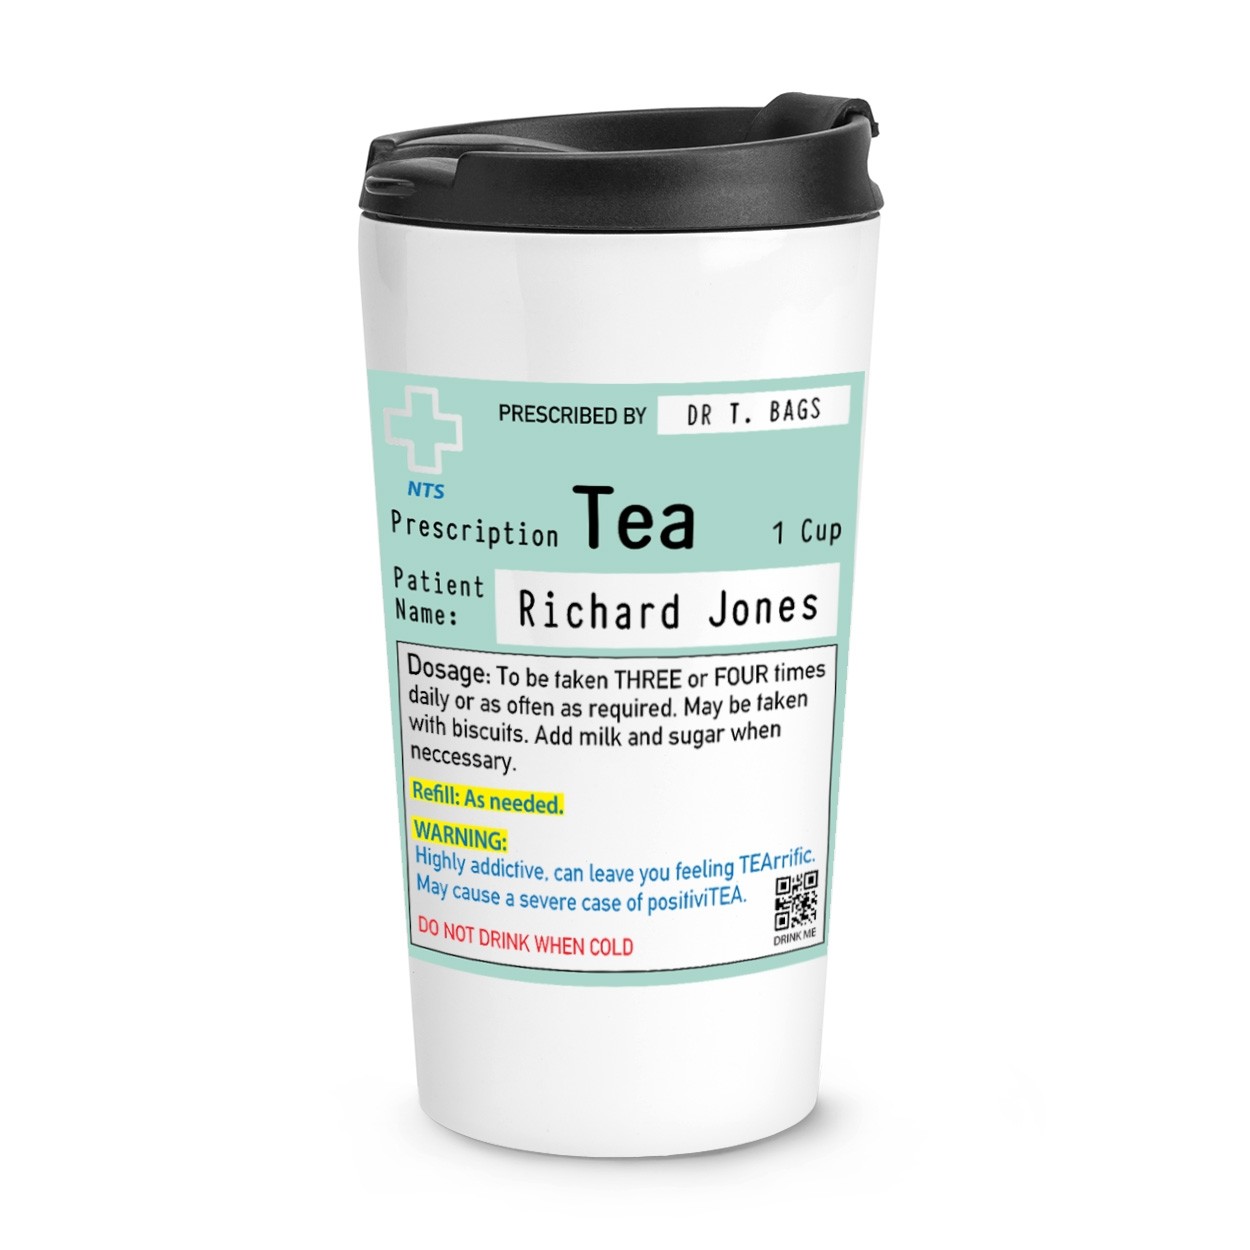 Personalised Name Tea Prescription Travel Mug Cup